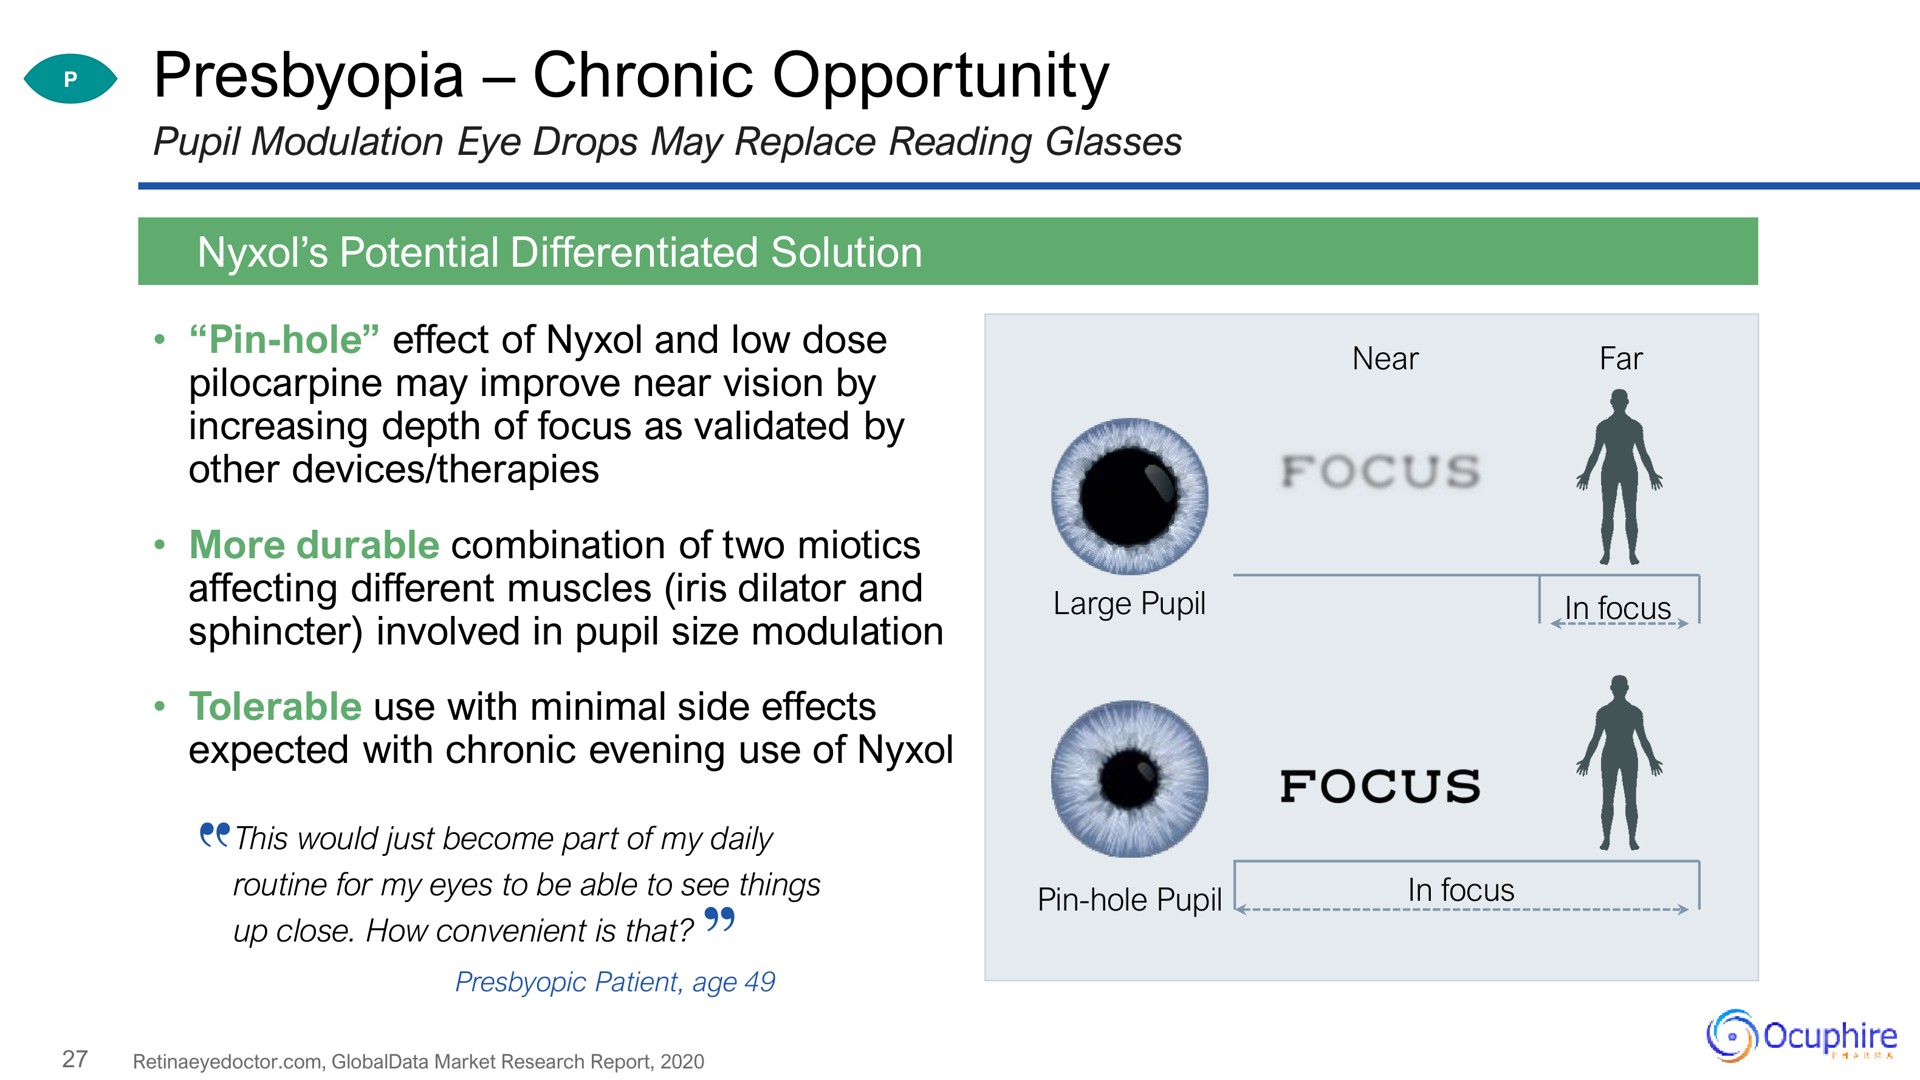 presbyopia chronic opportunity | Ocuphire Pharma